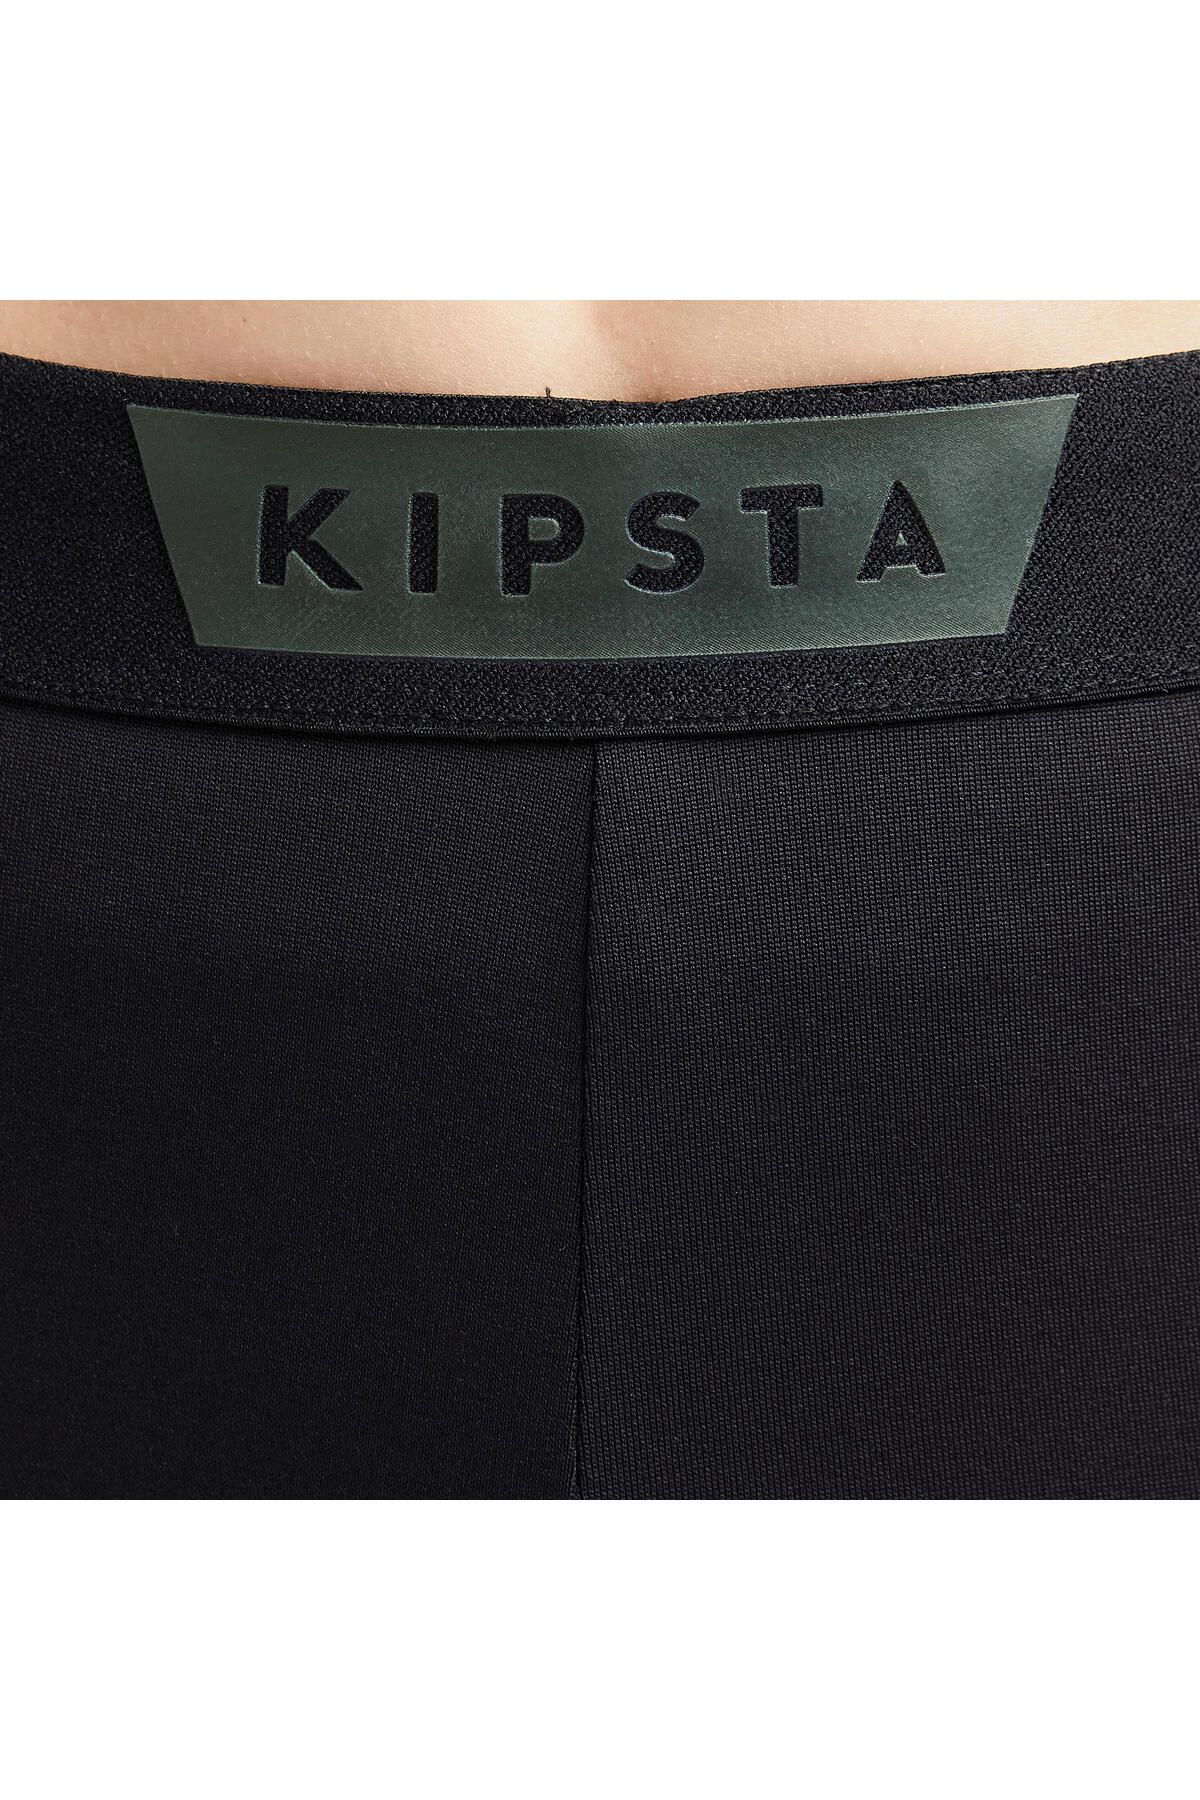 Kipsta Adult Thermal Tights Keepcomfort 100 Activewear Bottoms, Black, 32,  MED – CA.DI.ME.